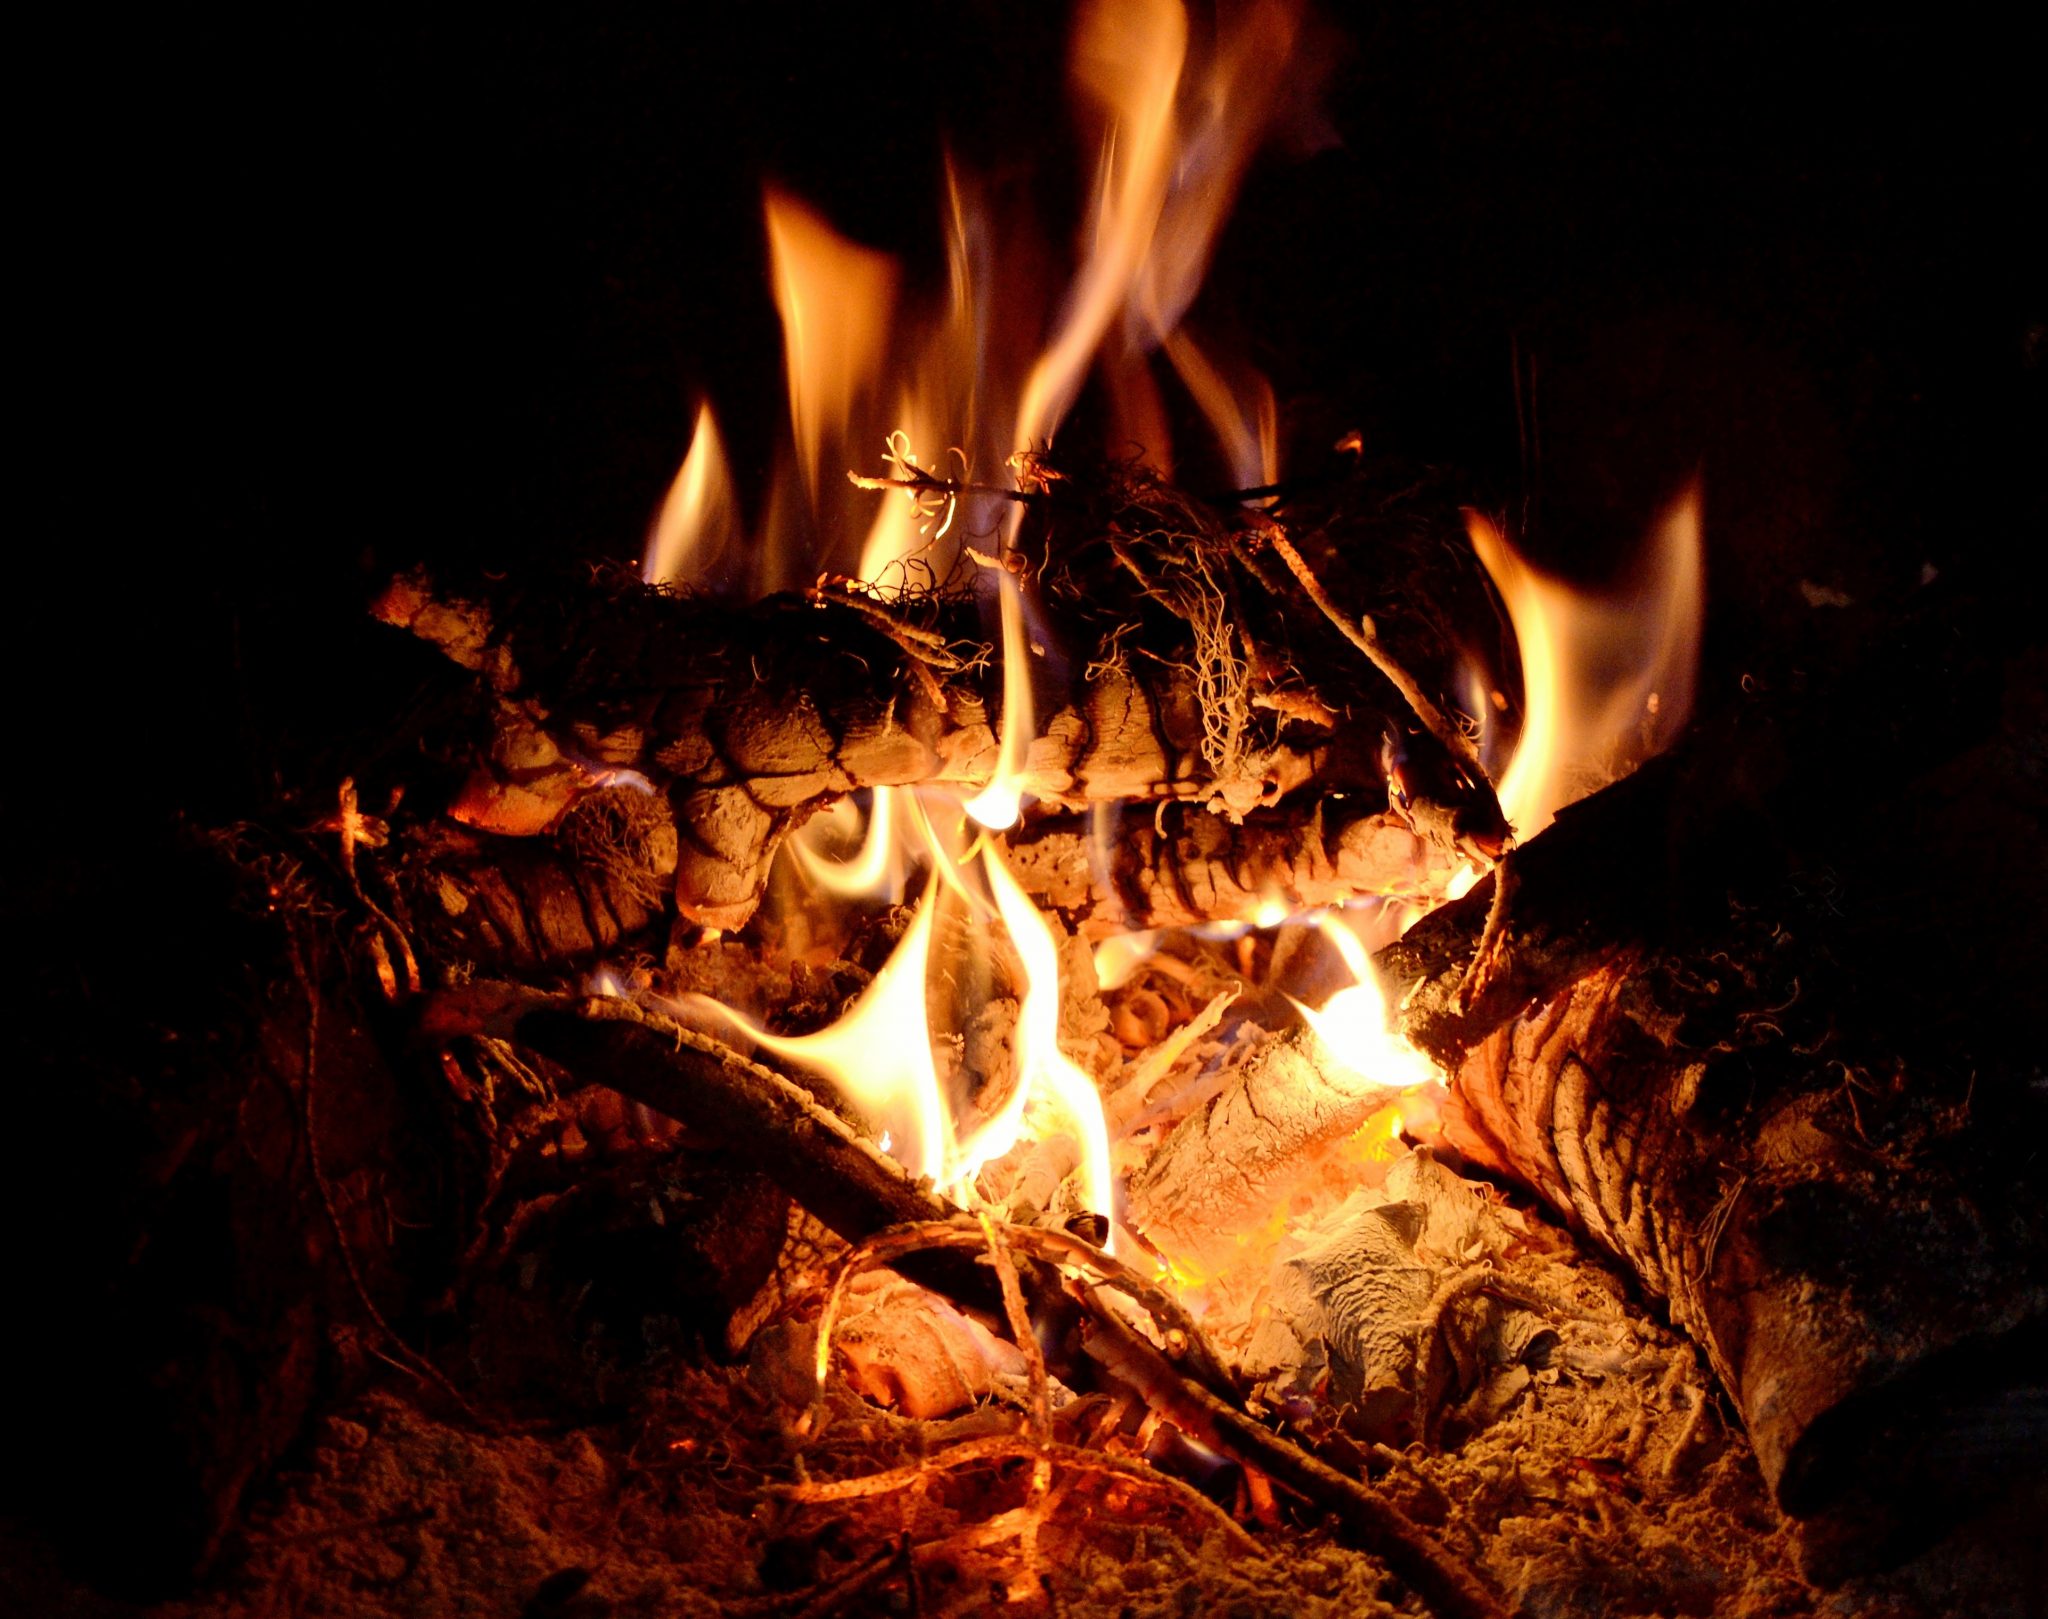 Canva Fire Fireplace Bonfire Home